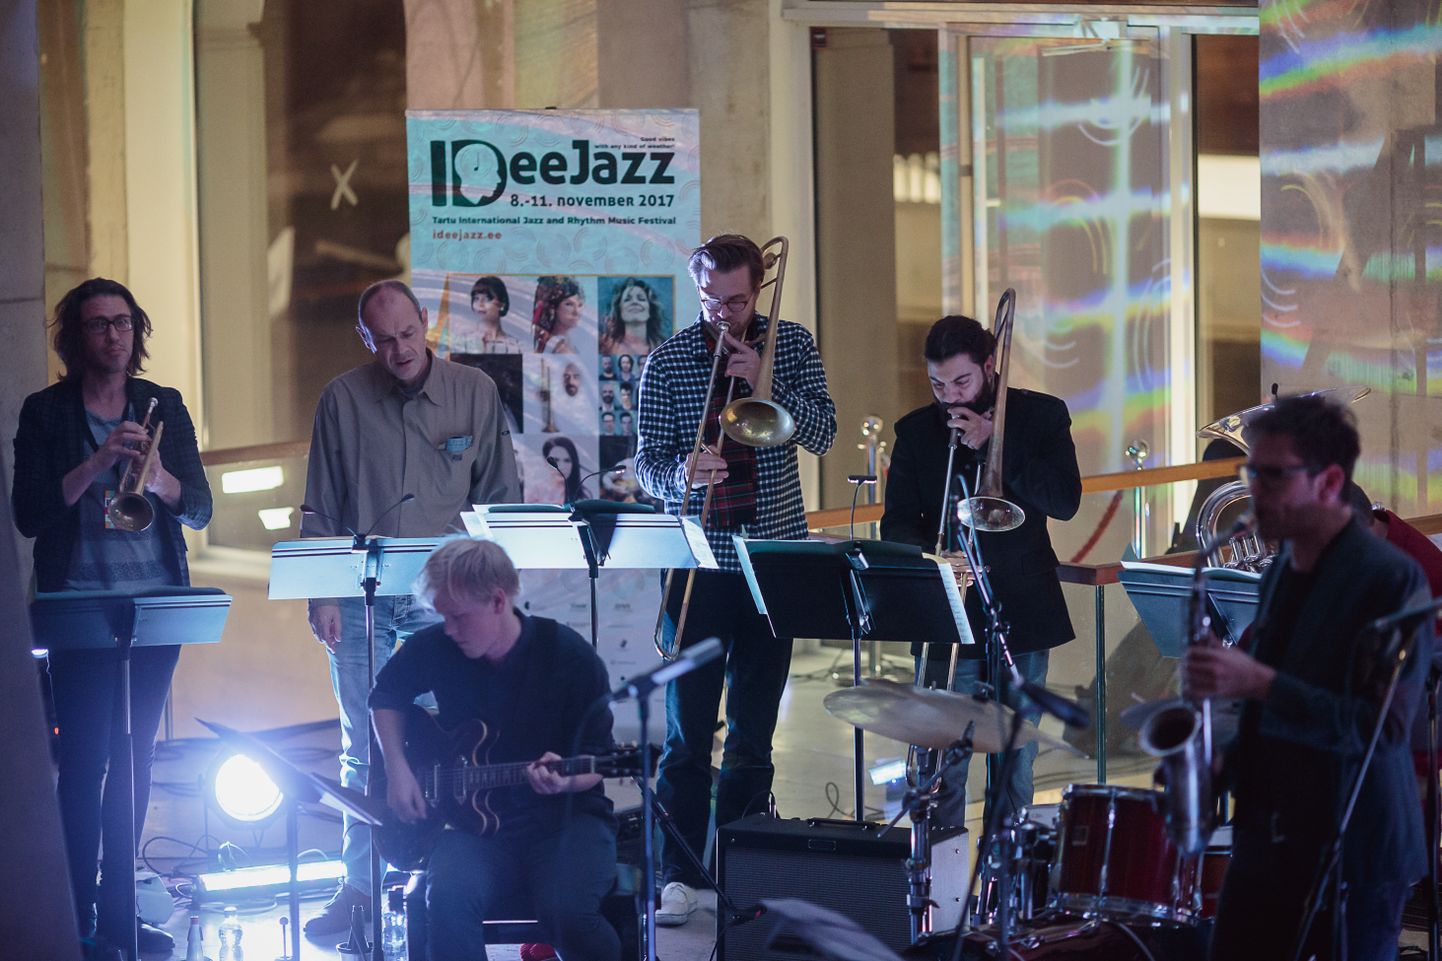 Момент фестиваля "IDeeJazz" в Нарвском колледже Тартуского университета на архивном фотоснимке 2017 года.